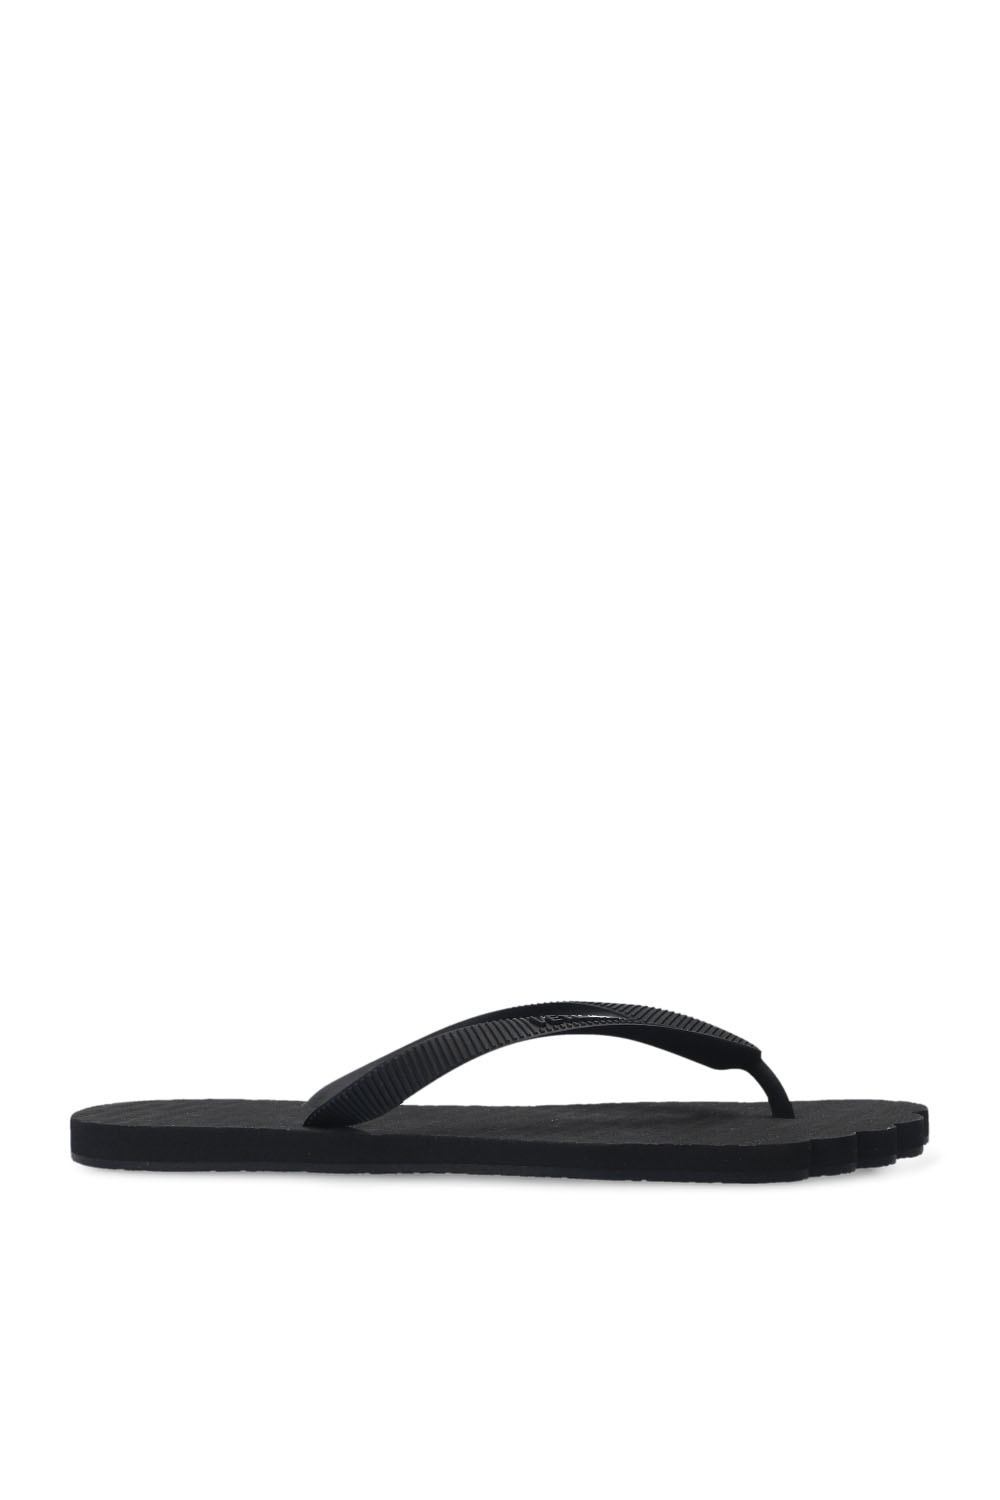 black rubber flip flops